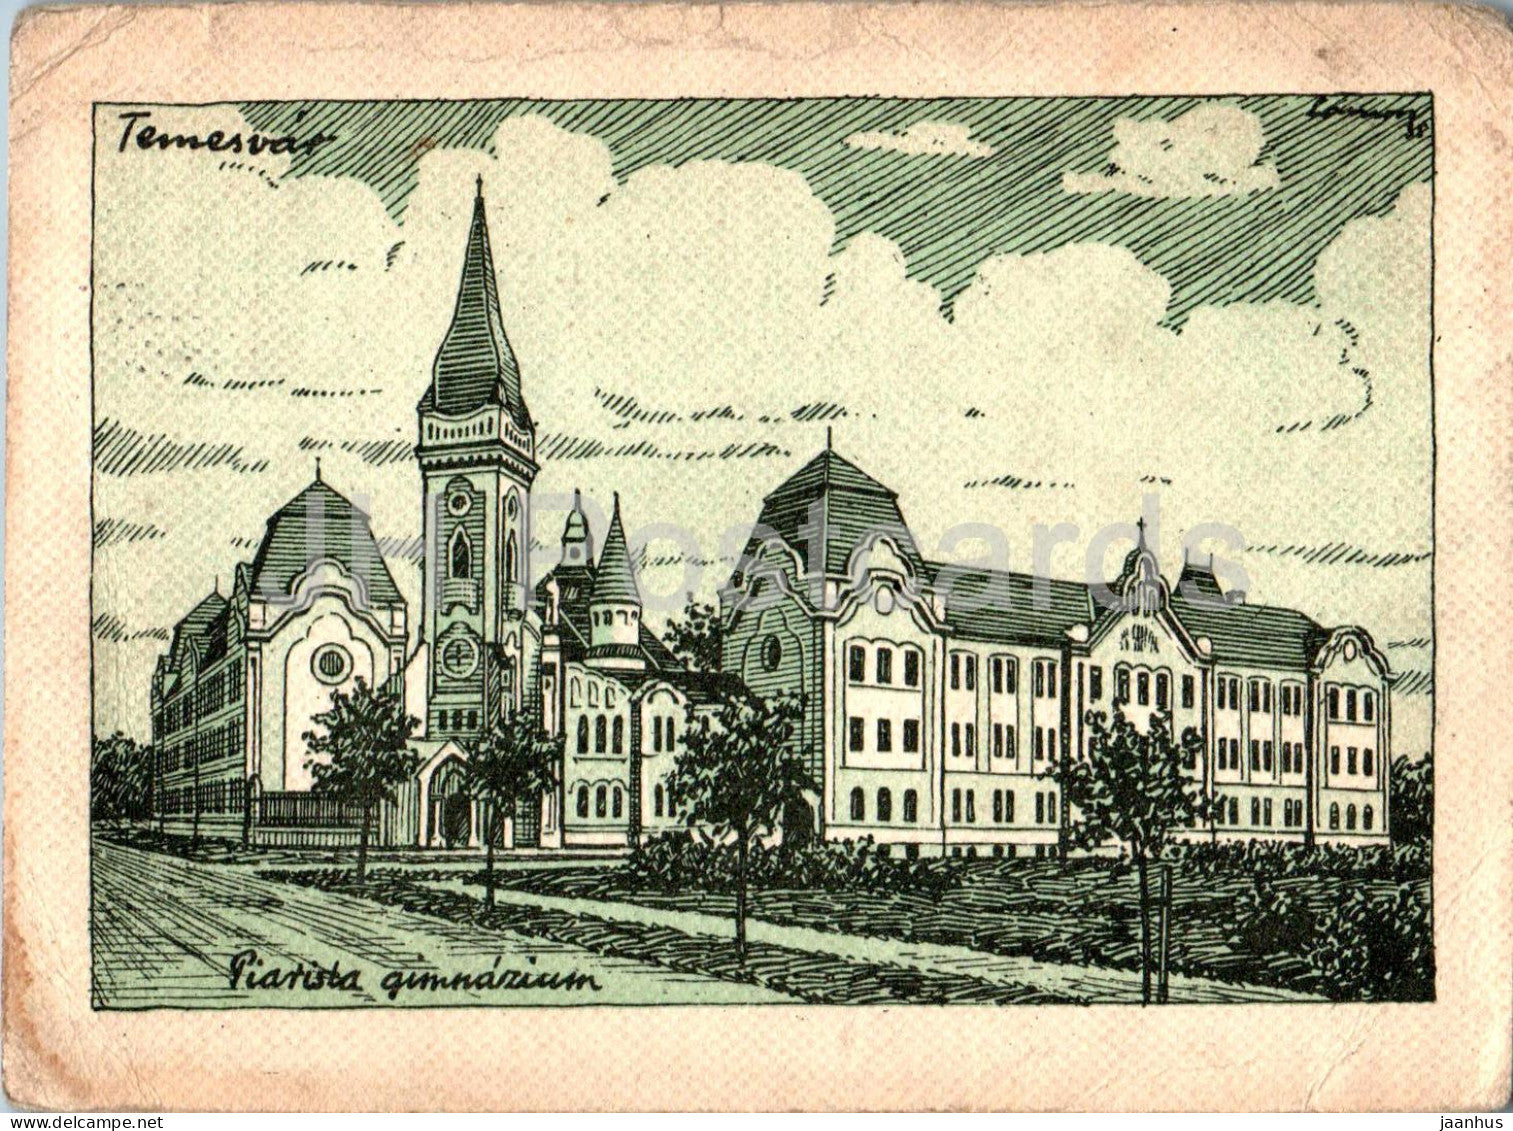 Temesvar - Piarista gimnazium - Piarista gymnasium - school - old postcard - Romania - used - JH Postcards